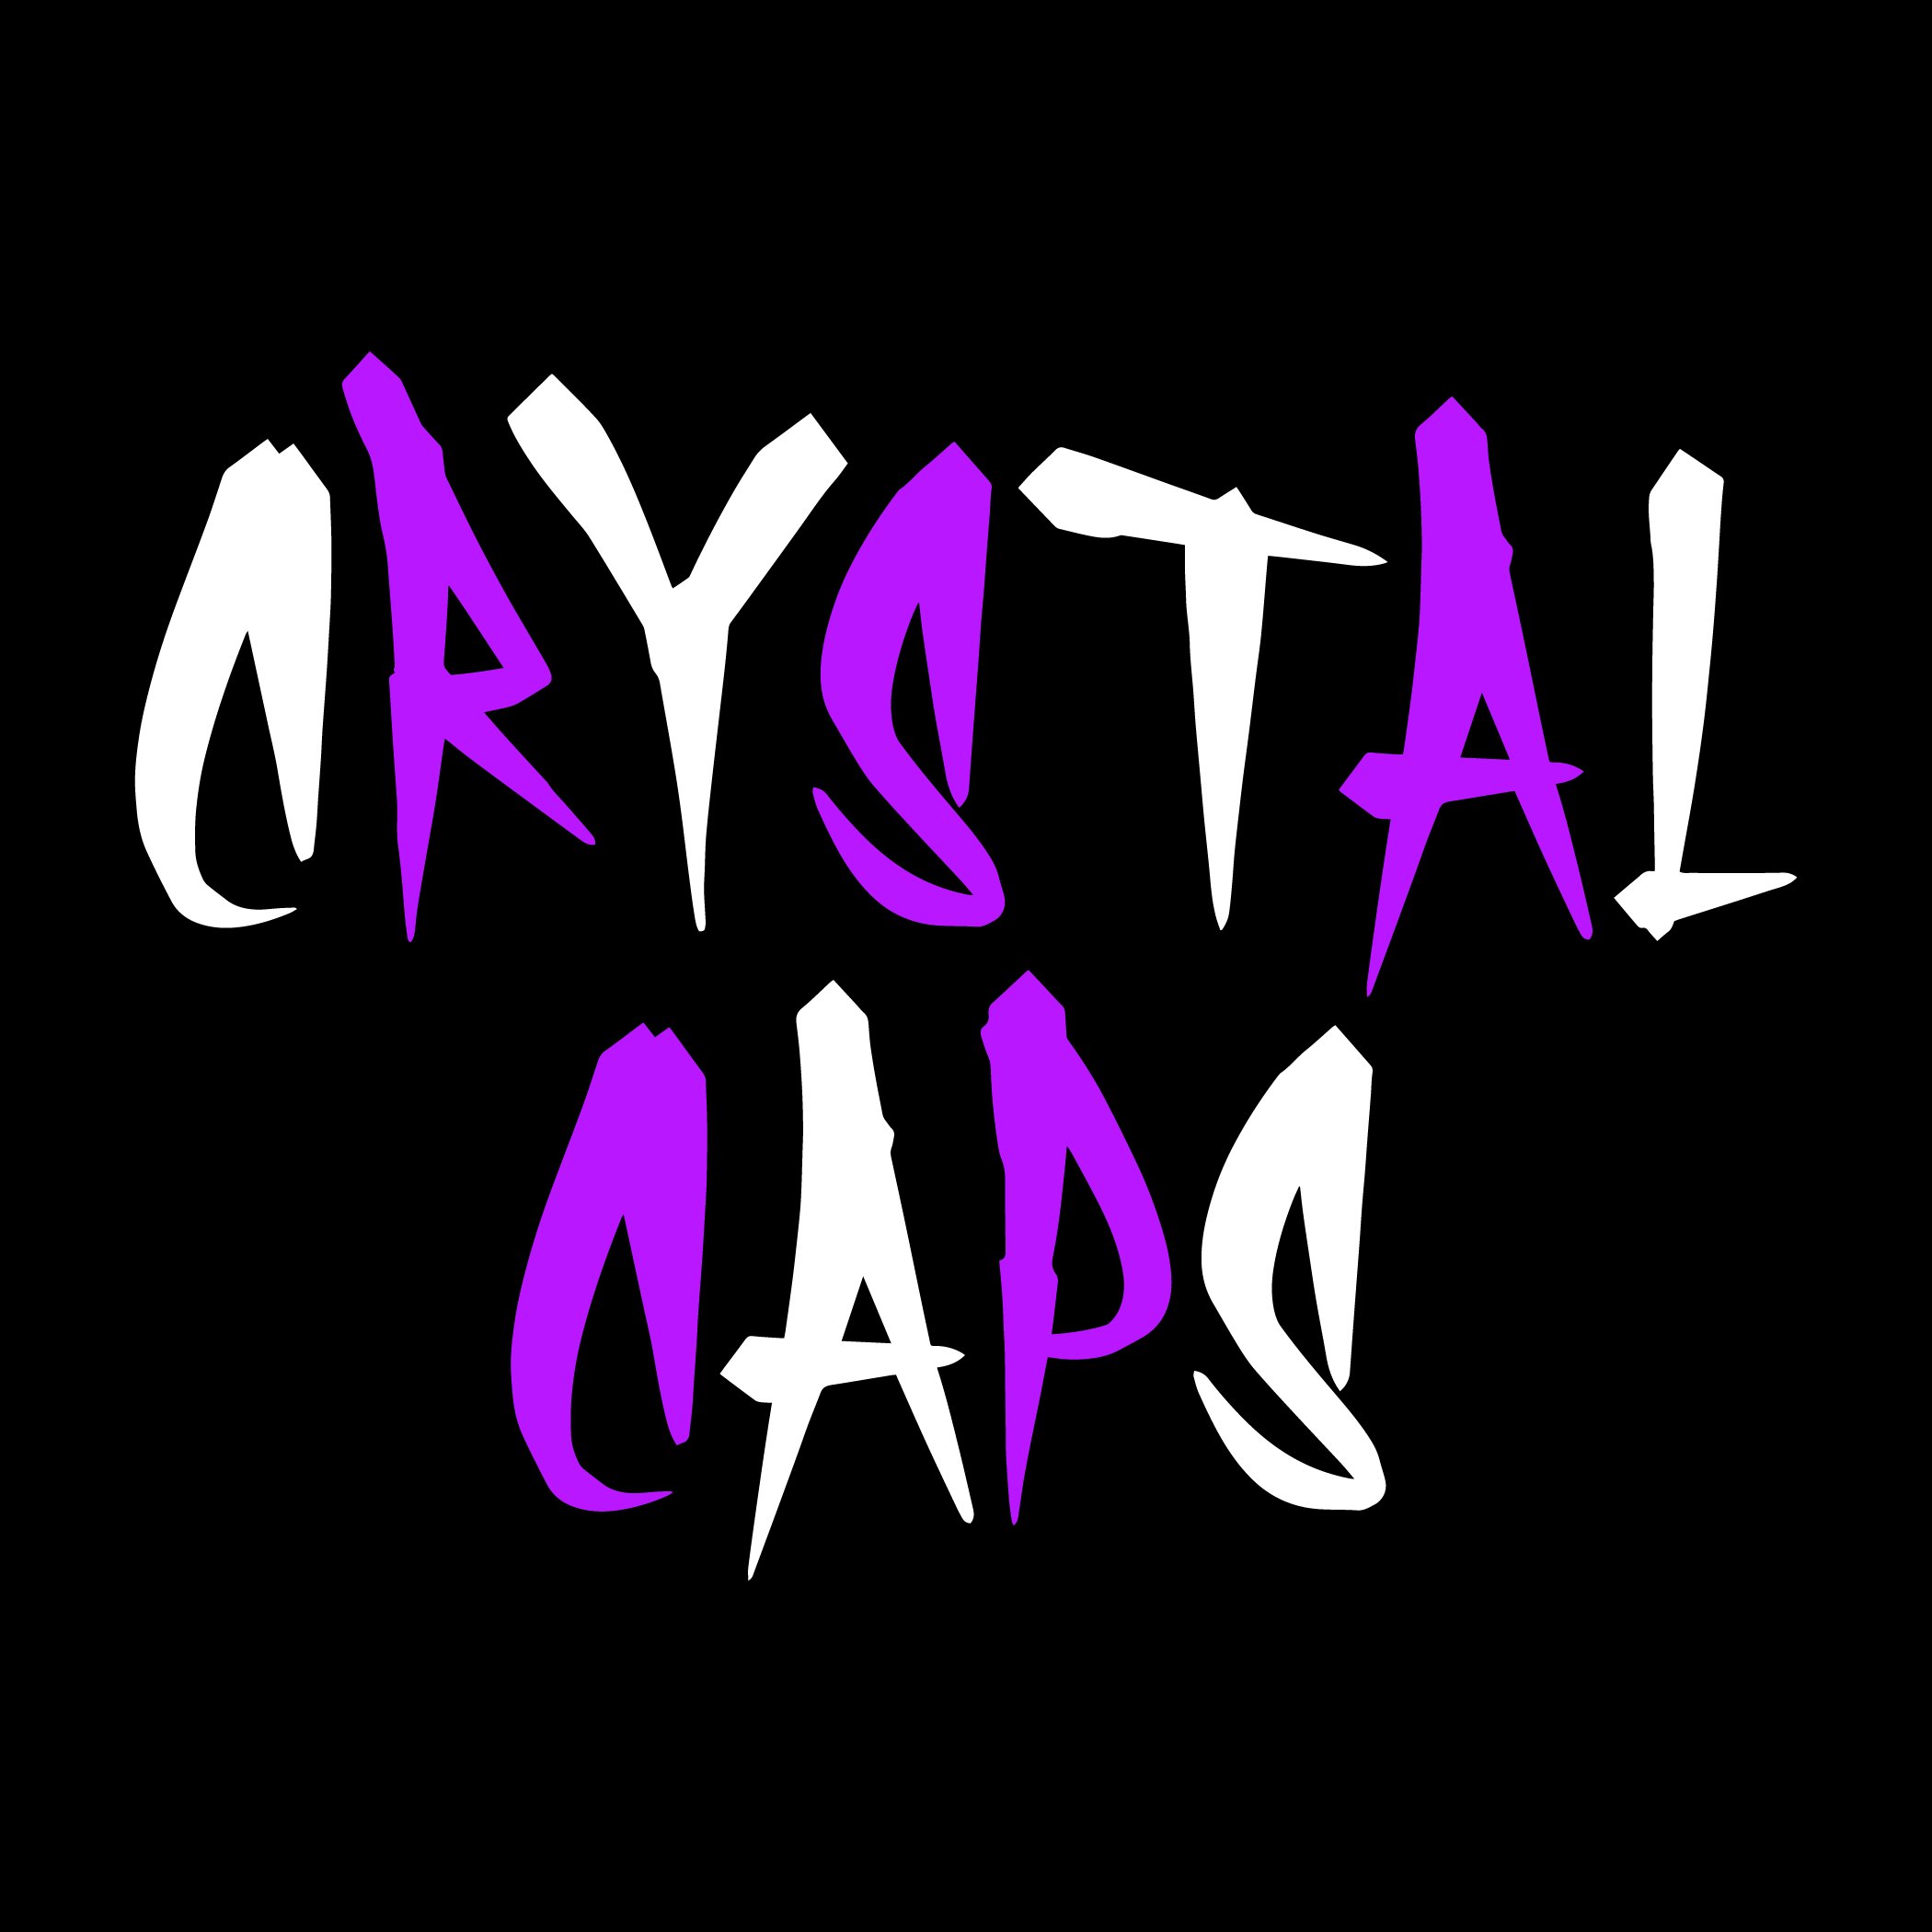 crystal caps previewimages 01 copy 01 493